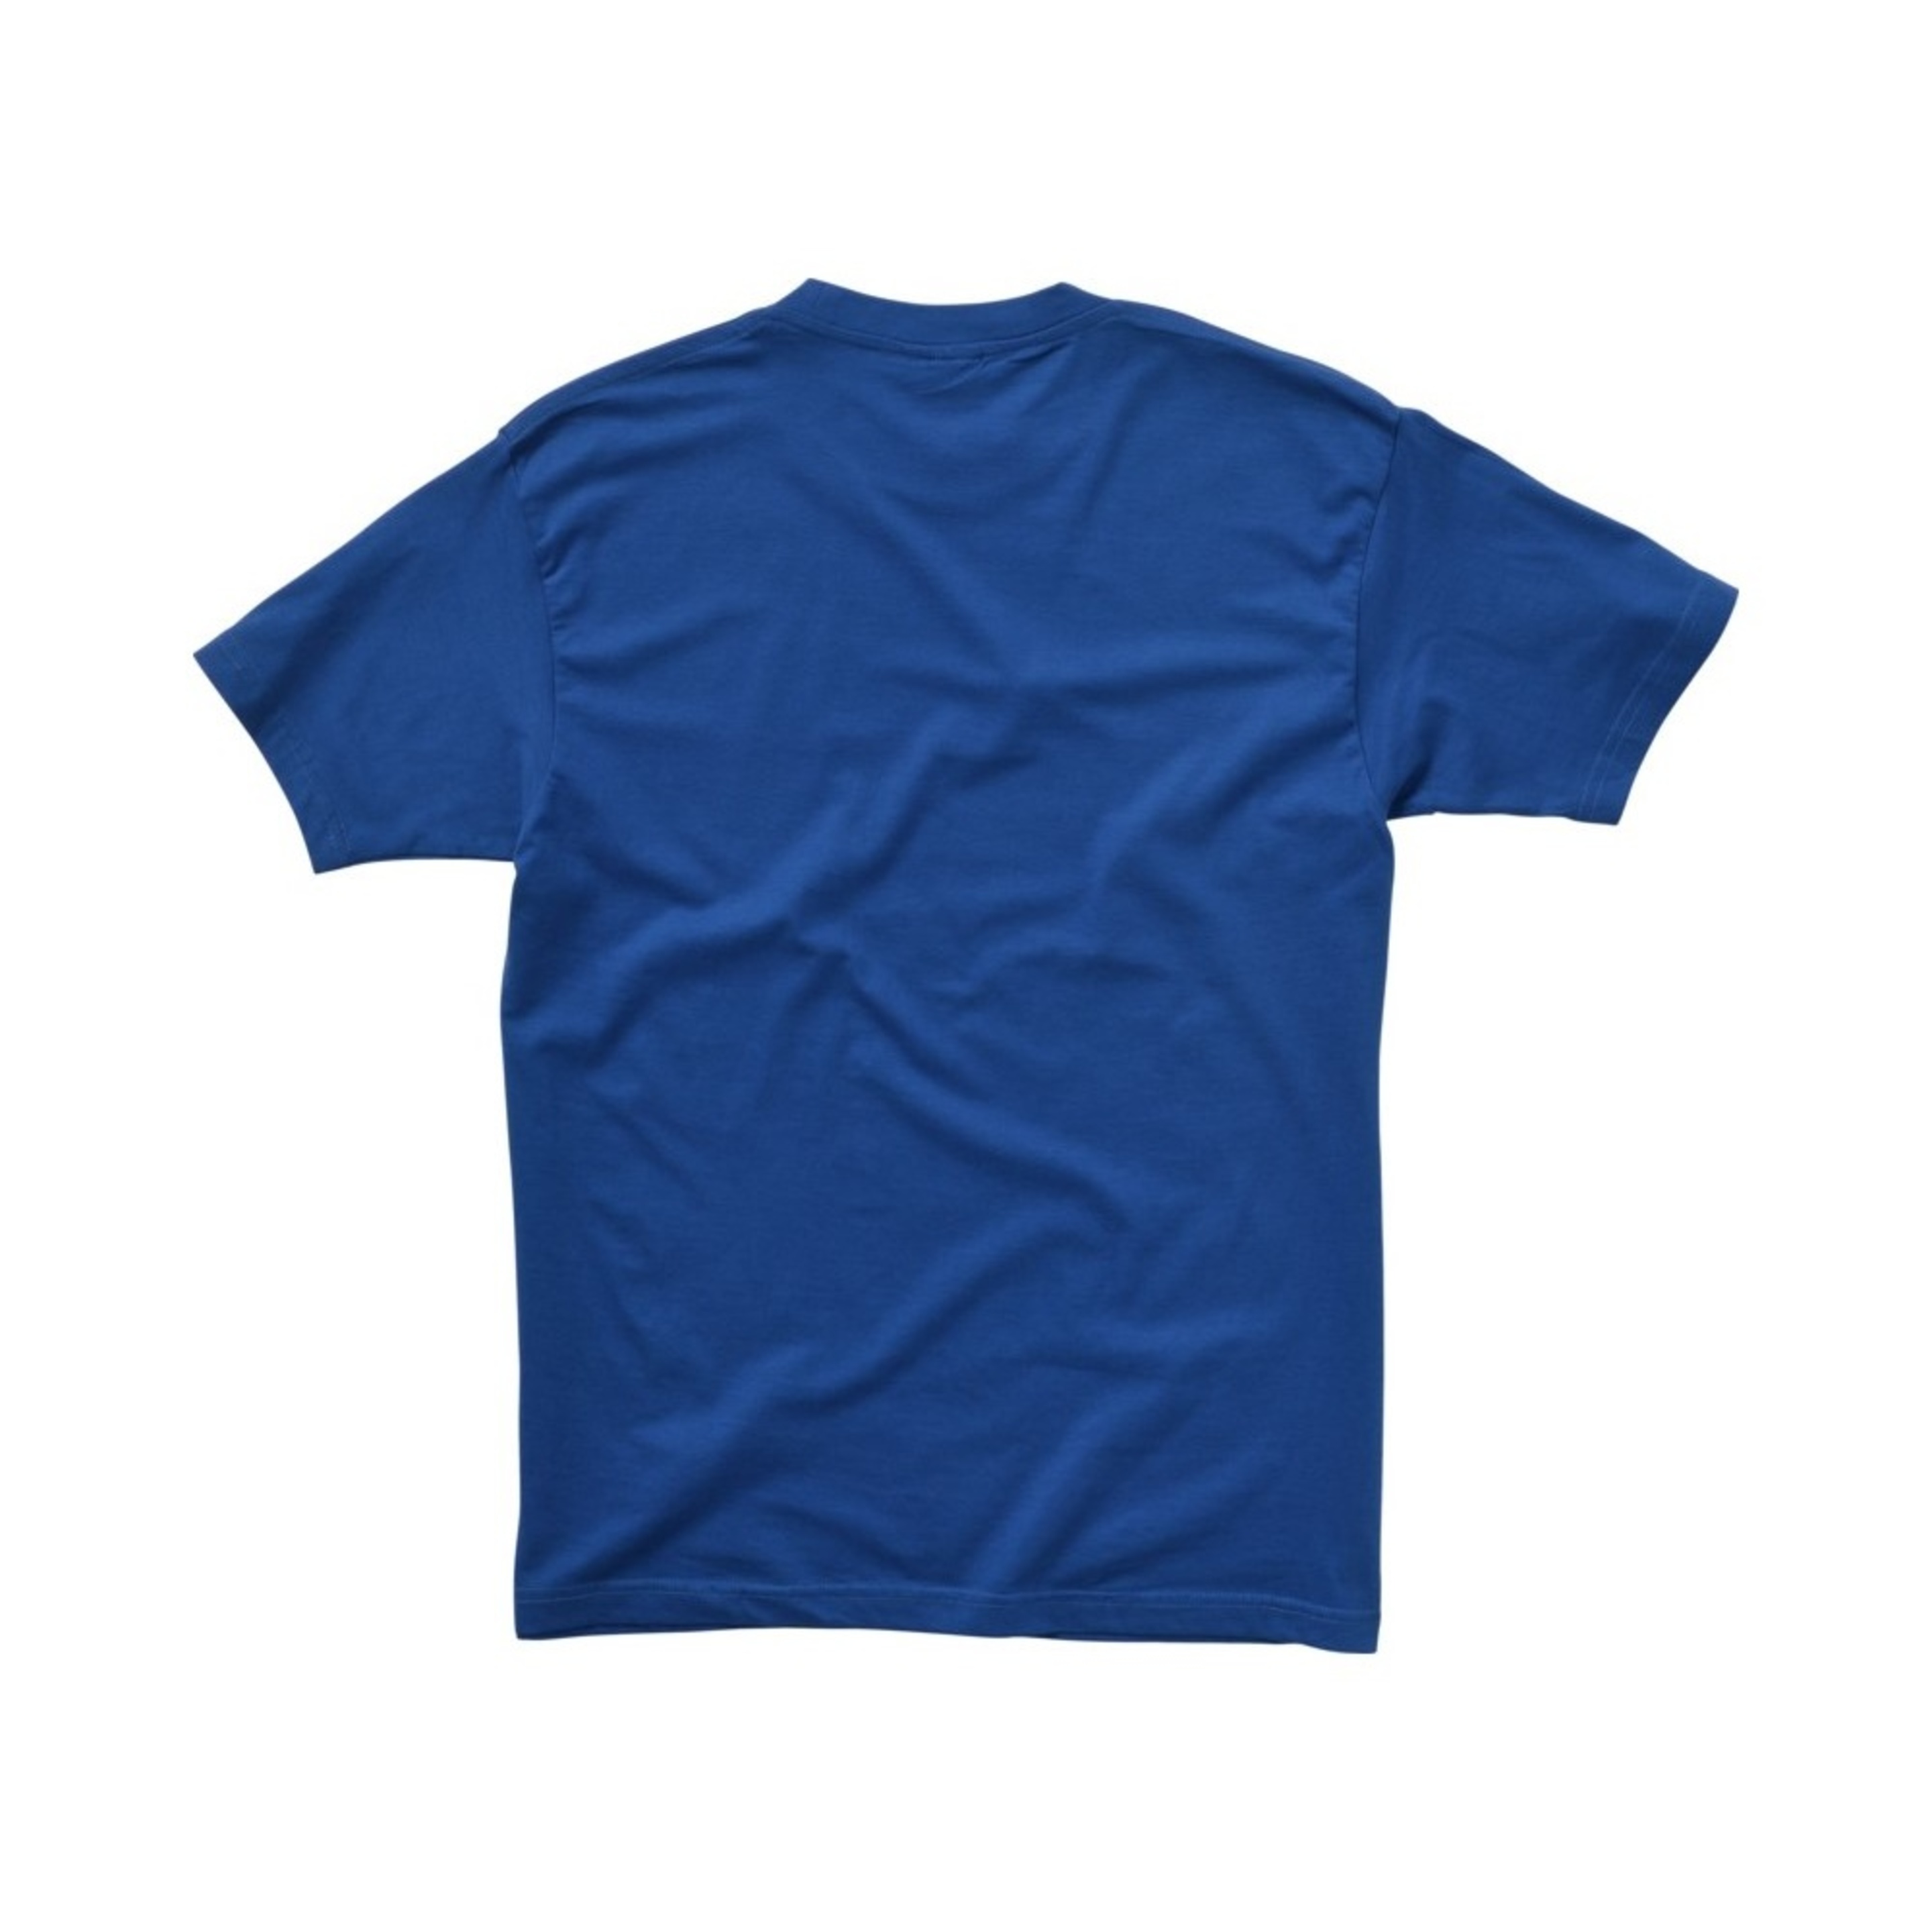 Camiseta Modelo Ace De Manga Corta Para Hombre Slazenger (Azul)